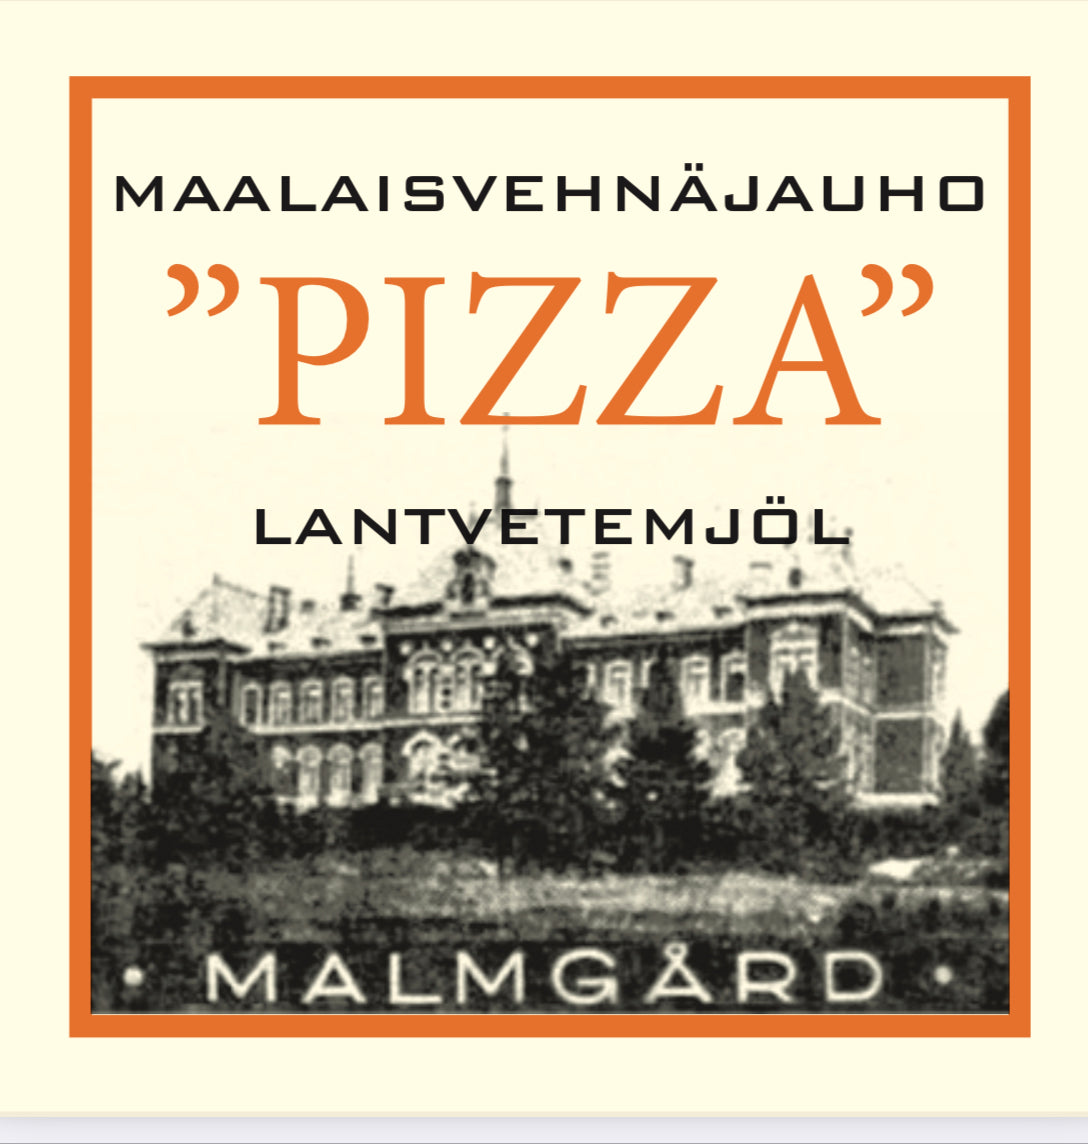 Malmgård organic pizza flour, country wheat